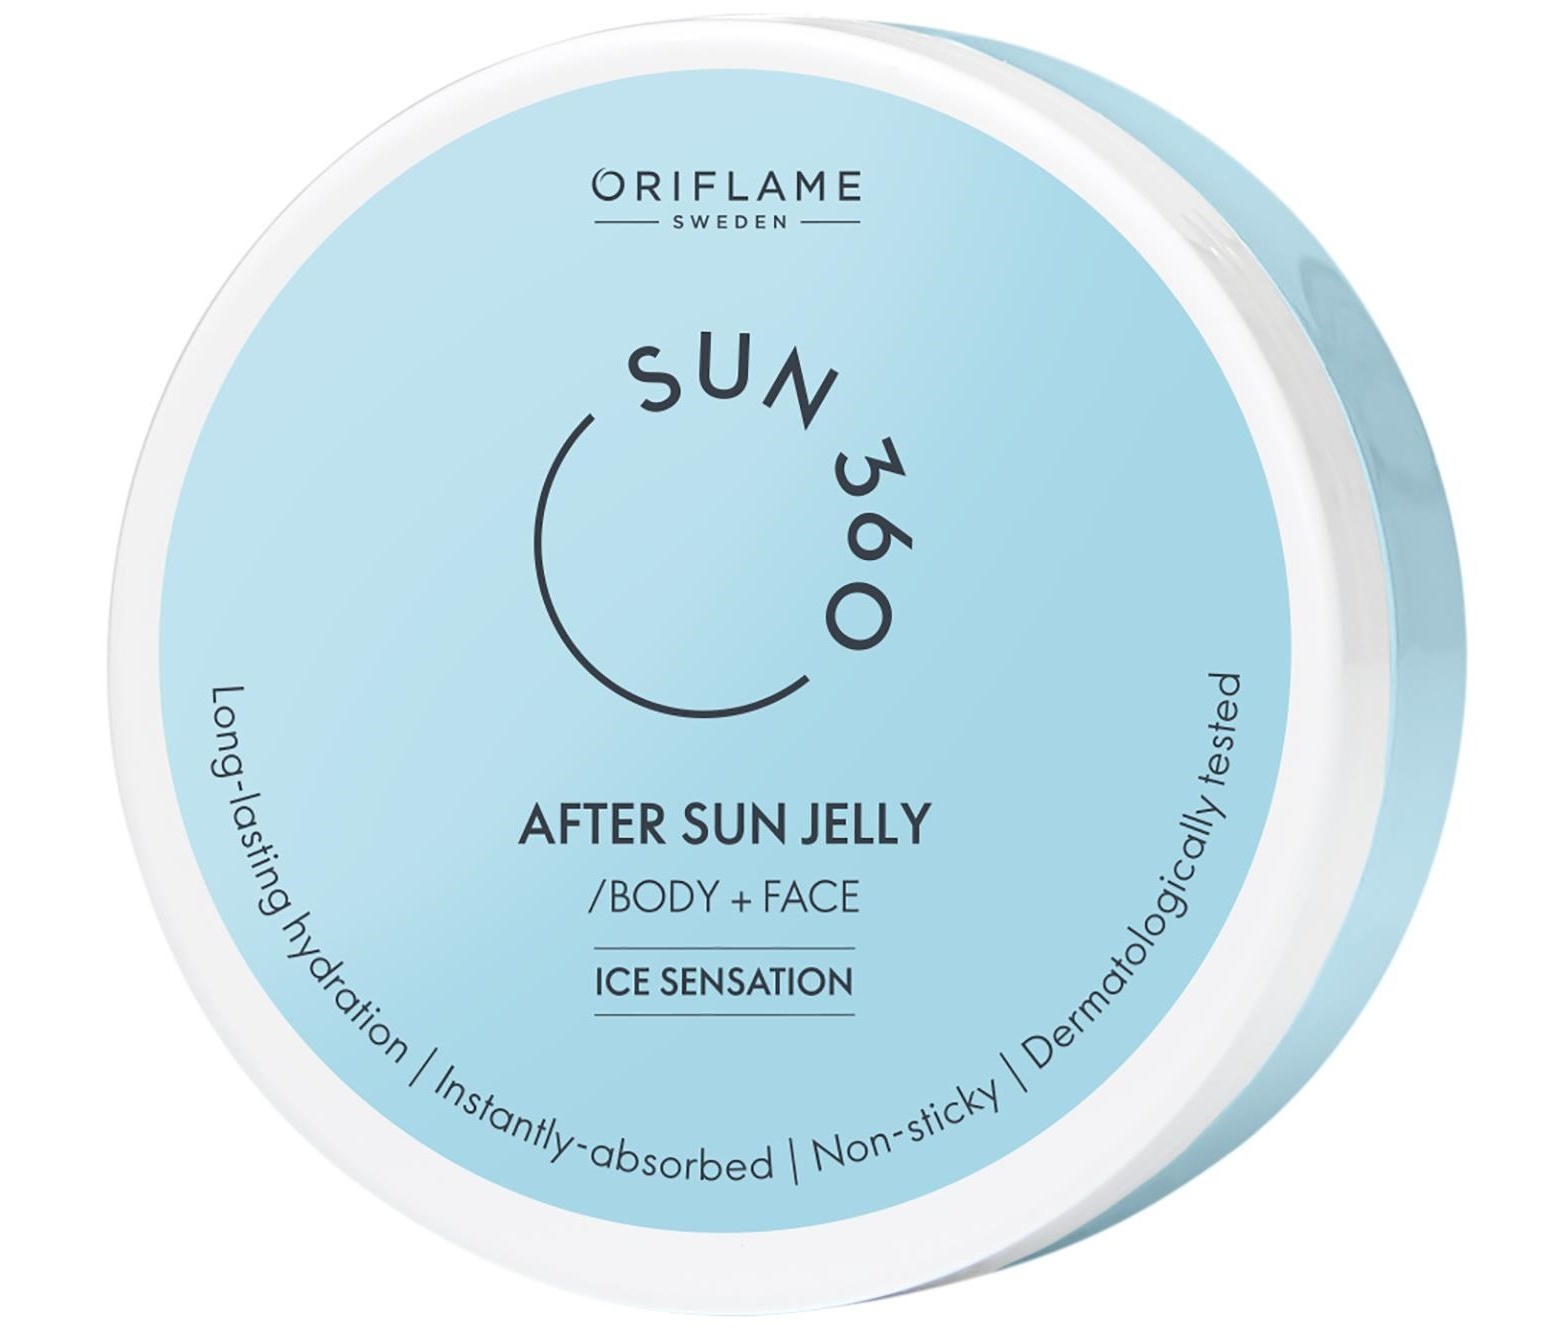 Oriflame Sun 360 After Sun Jelly Body + Face